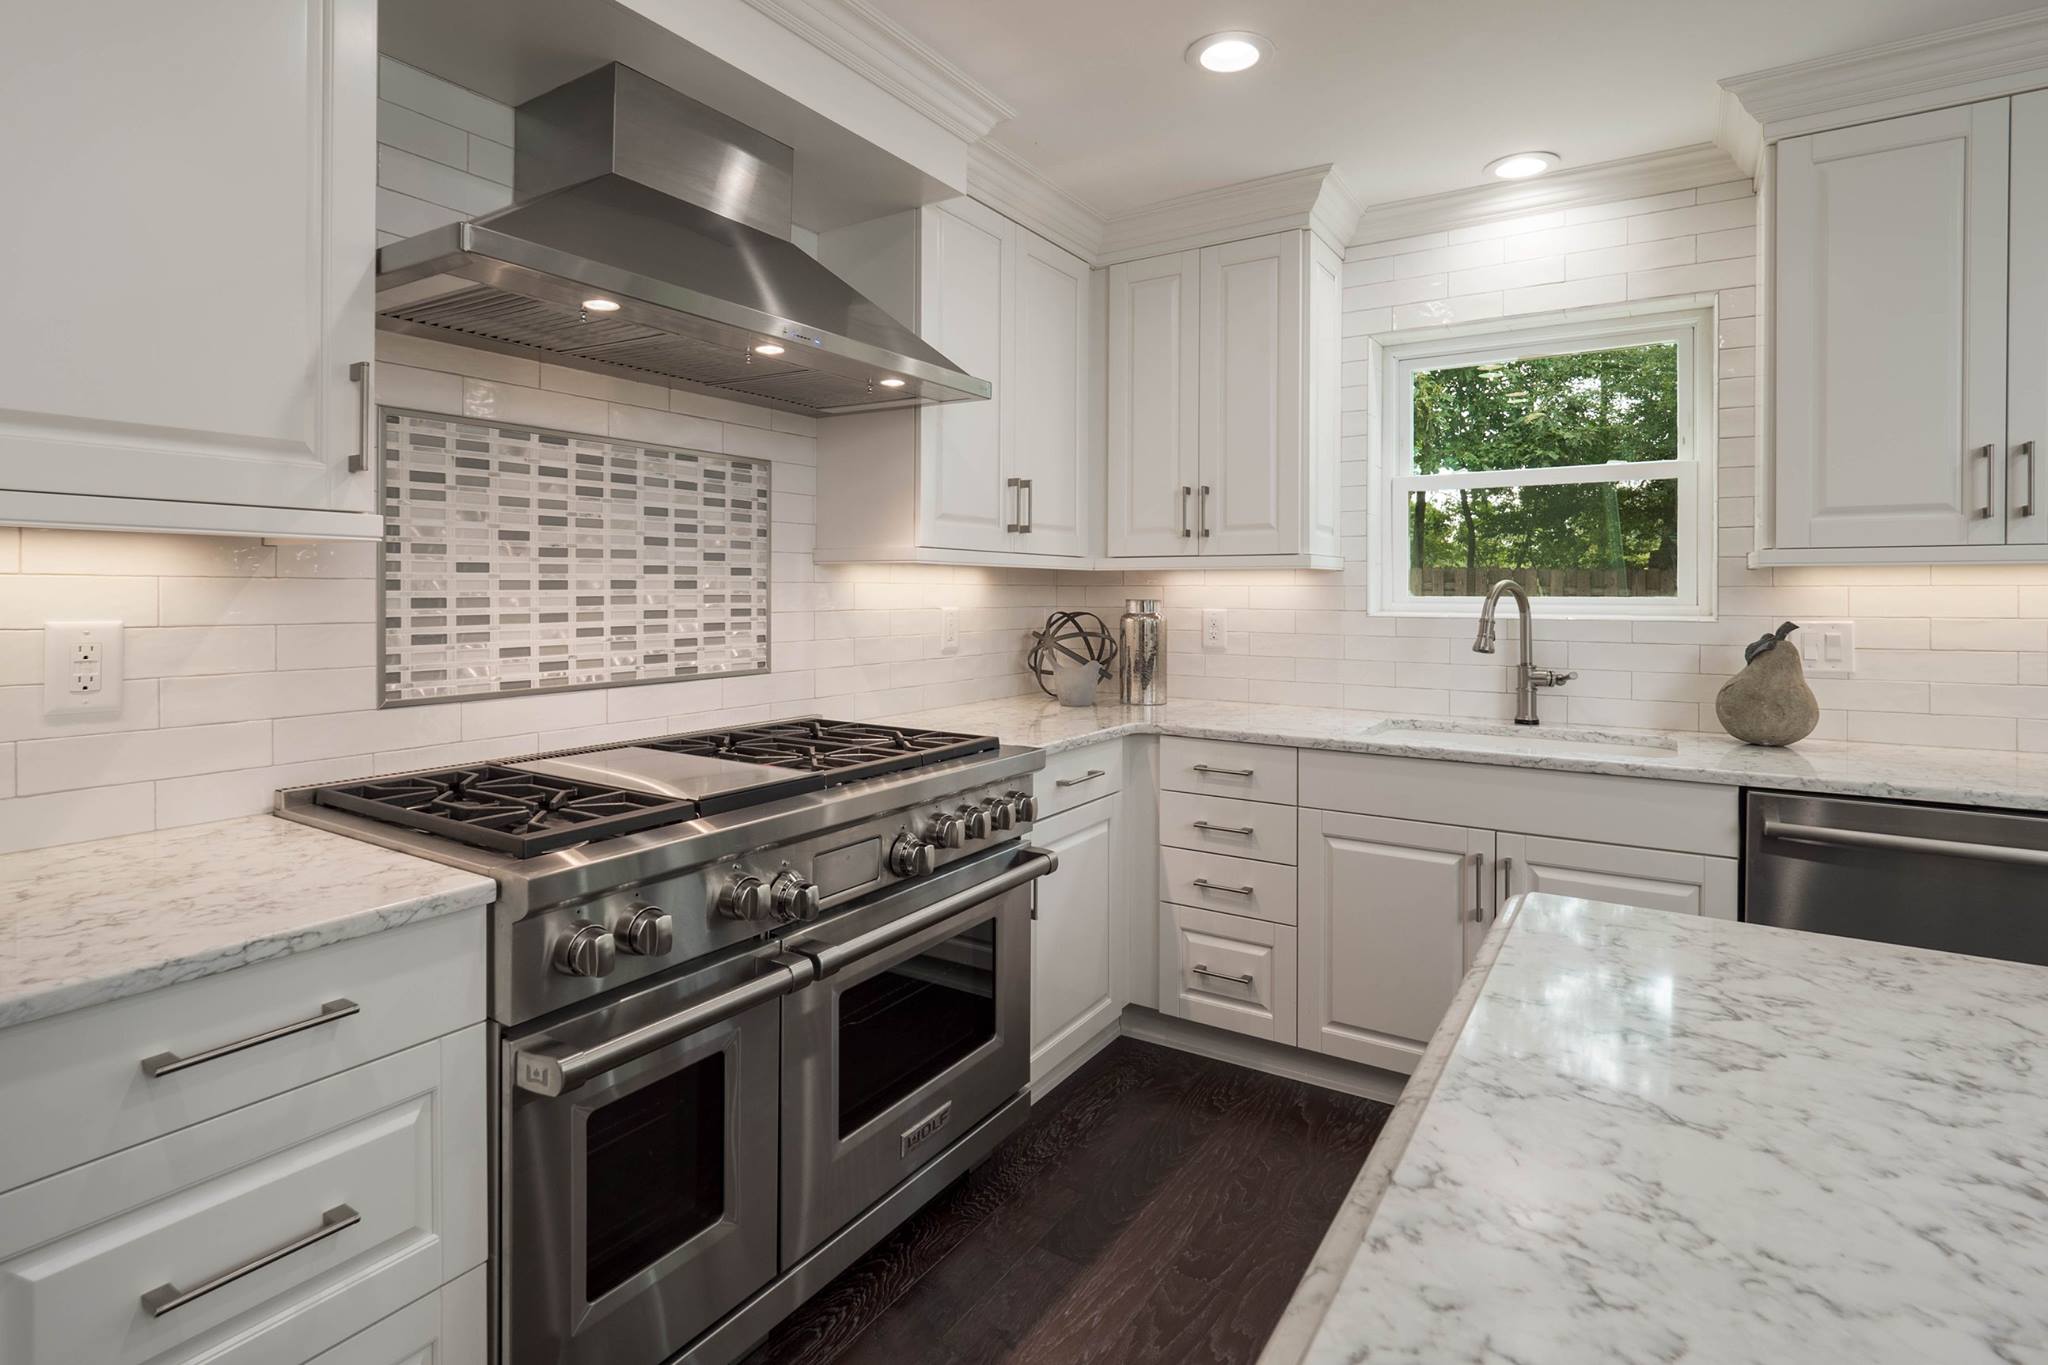 Modern Kitchen Gray And White : 35 Beautiful White Kitchen Designs